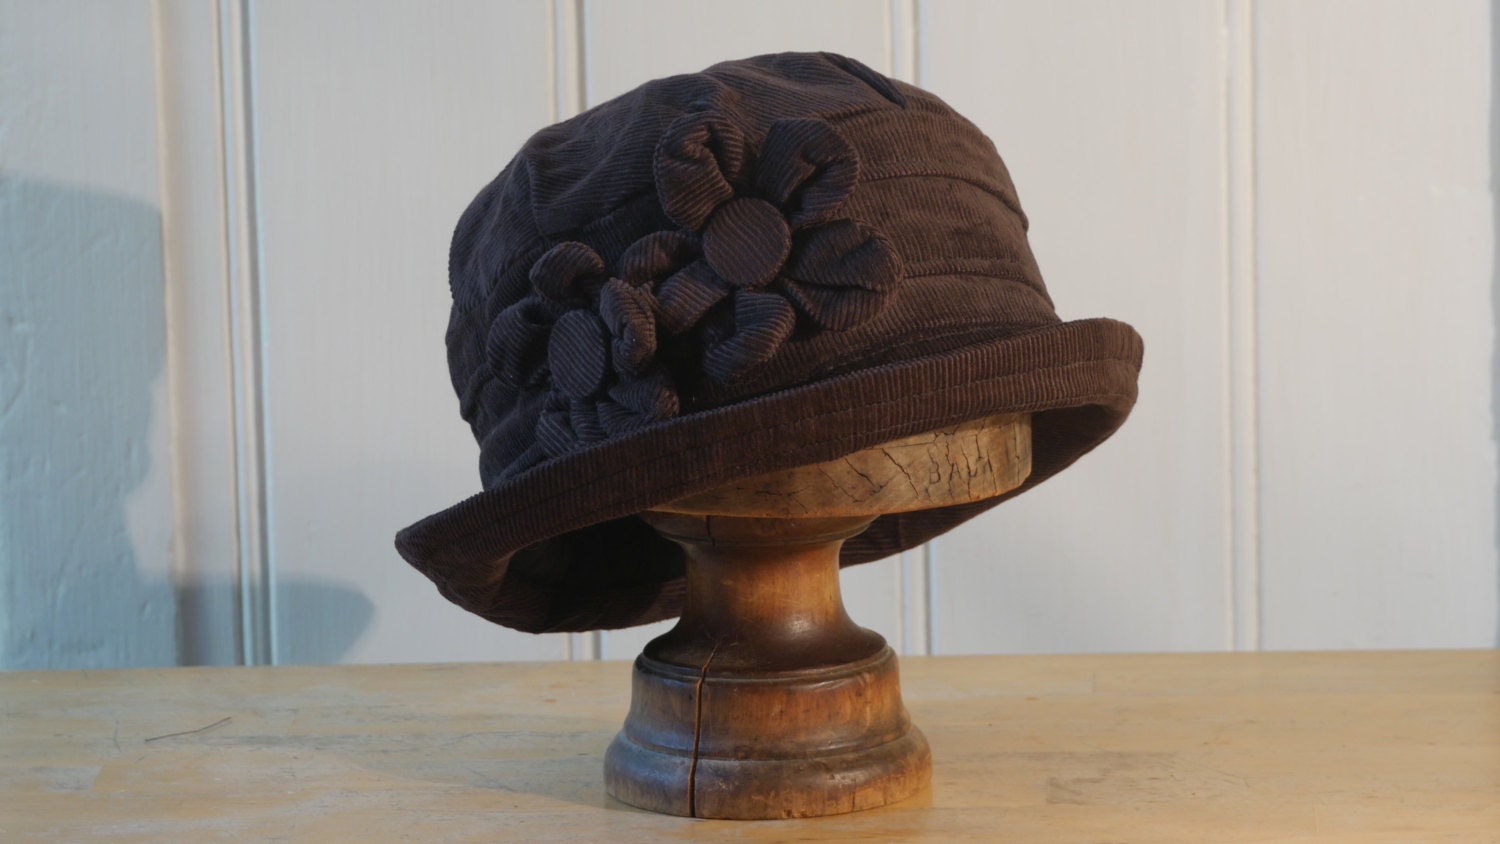 Womens rusty brown cloche felt hat. Classic 1920s style Hat